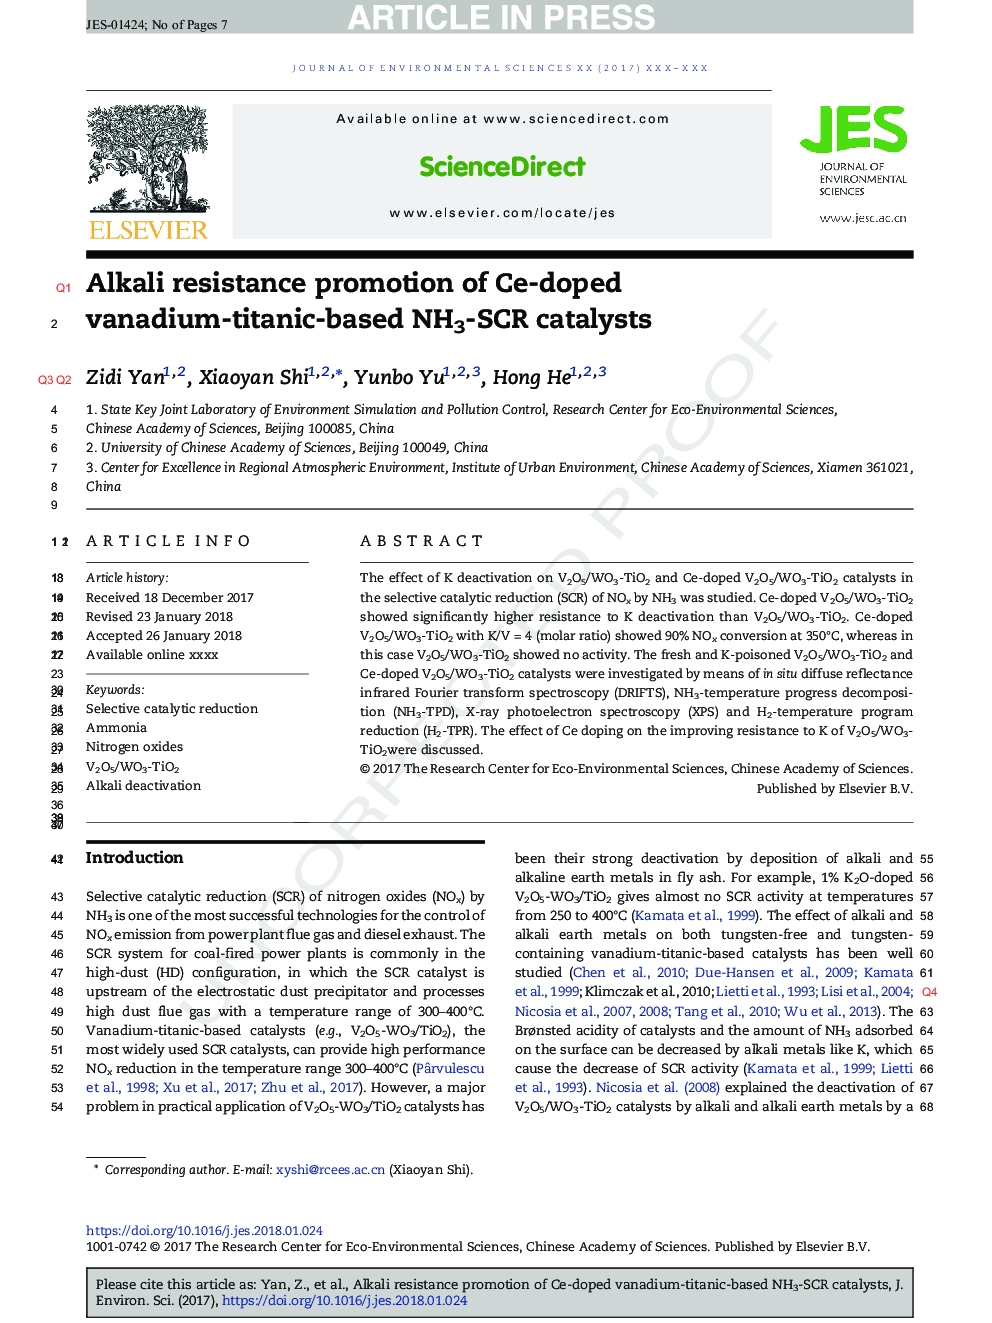 Alkali resistance promotion of Ce-doped vanadium-titanic-based NH3-SCR catalysts